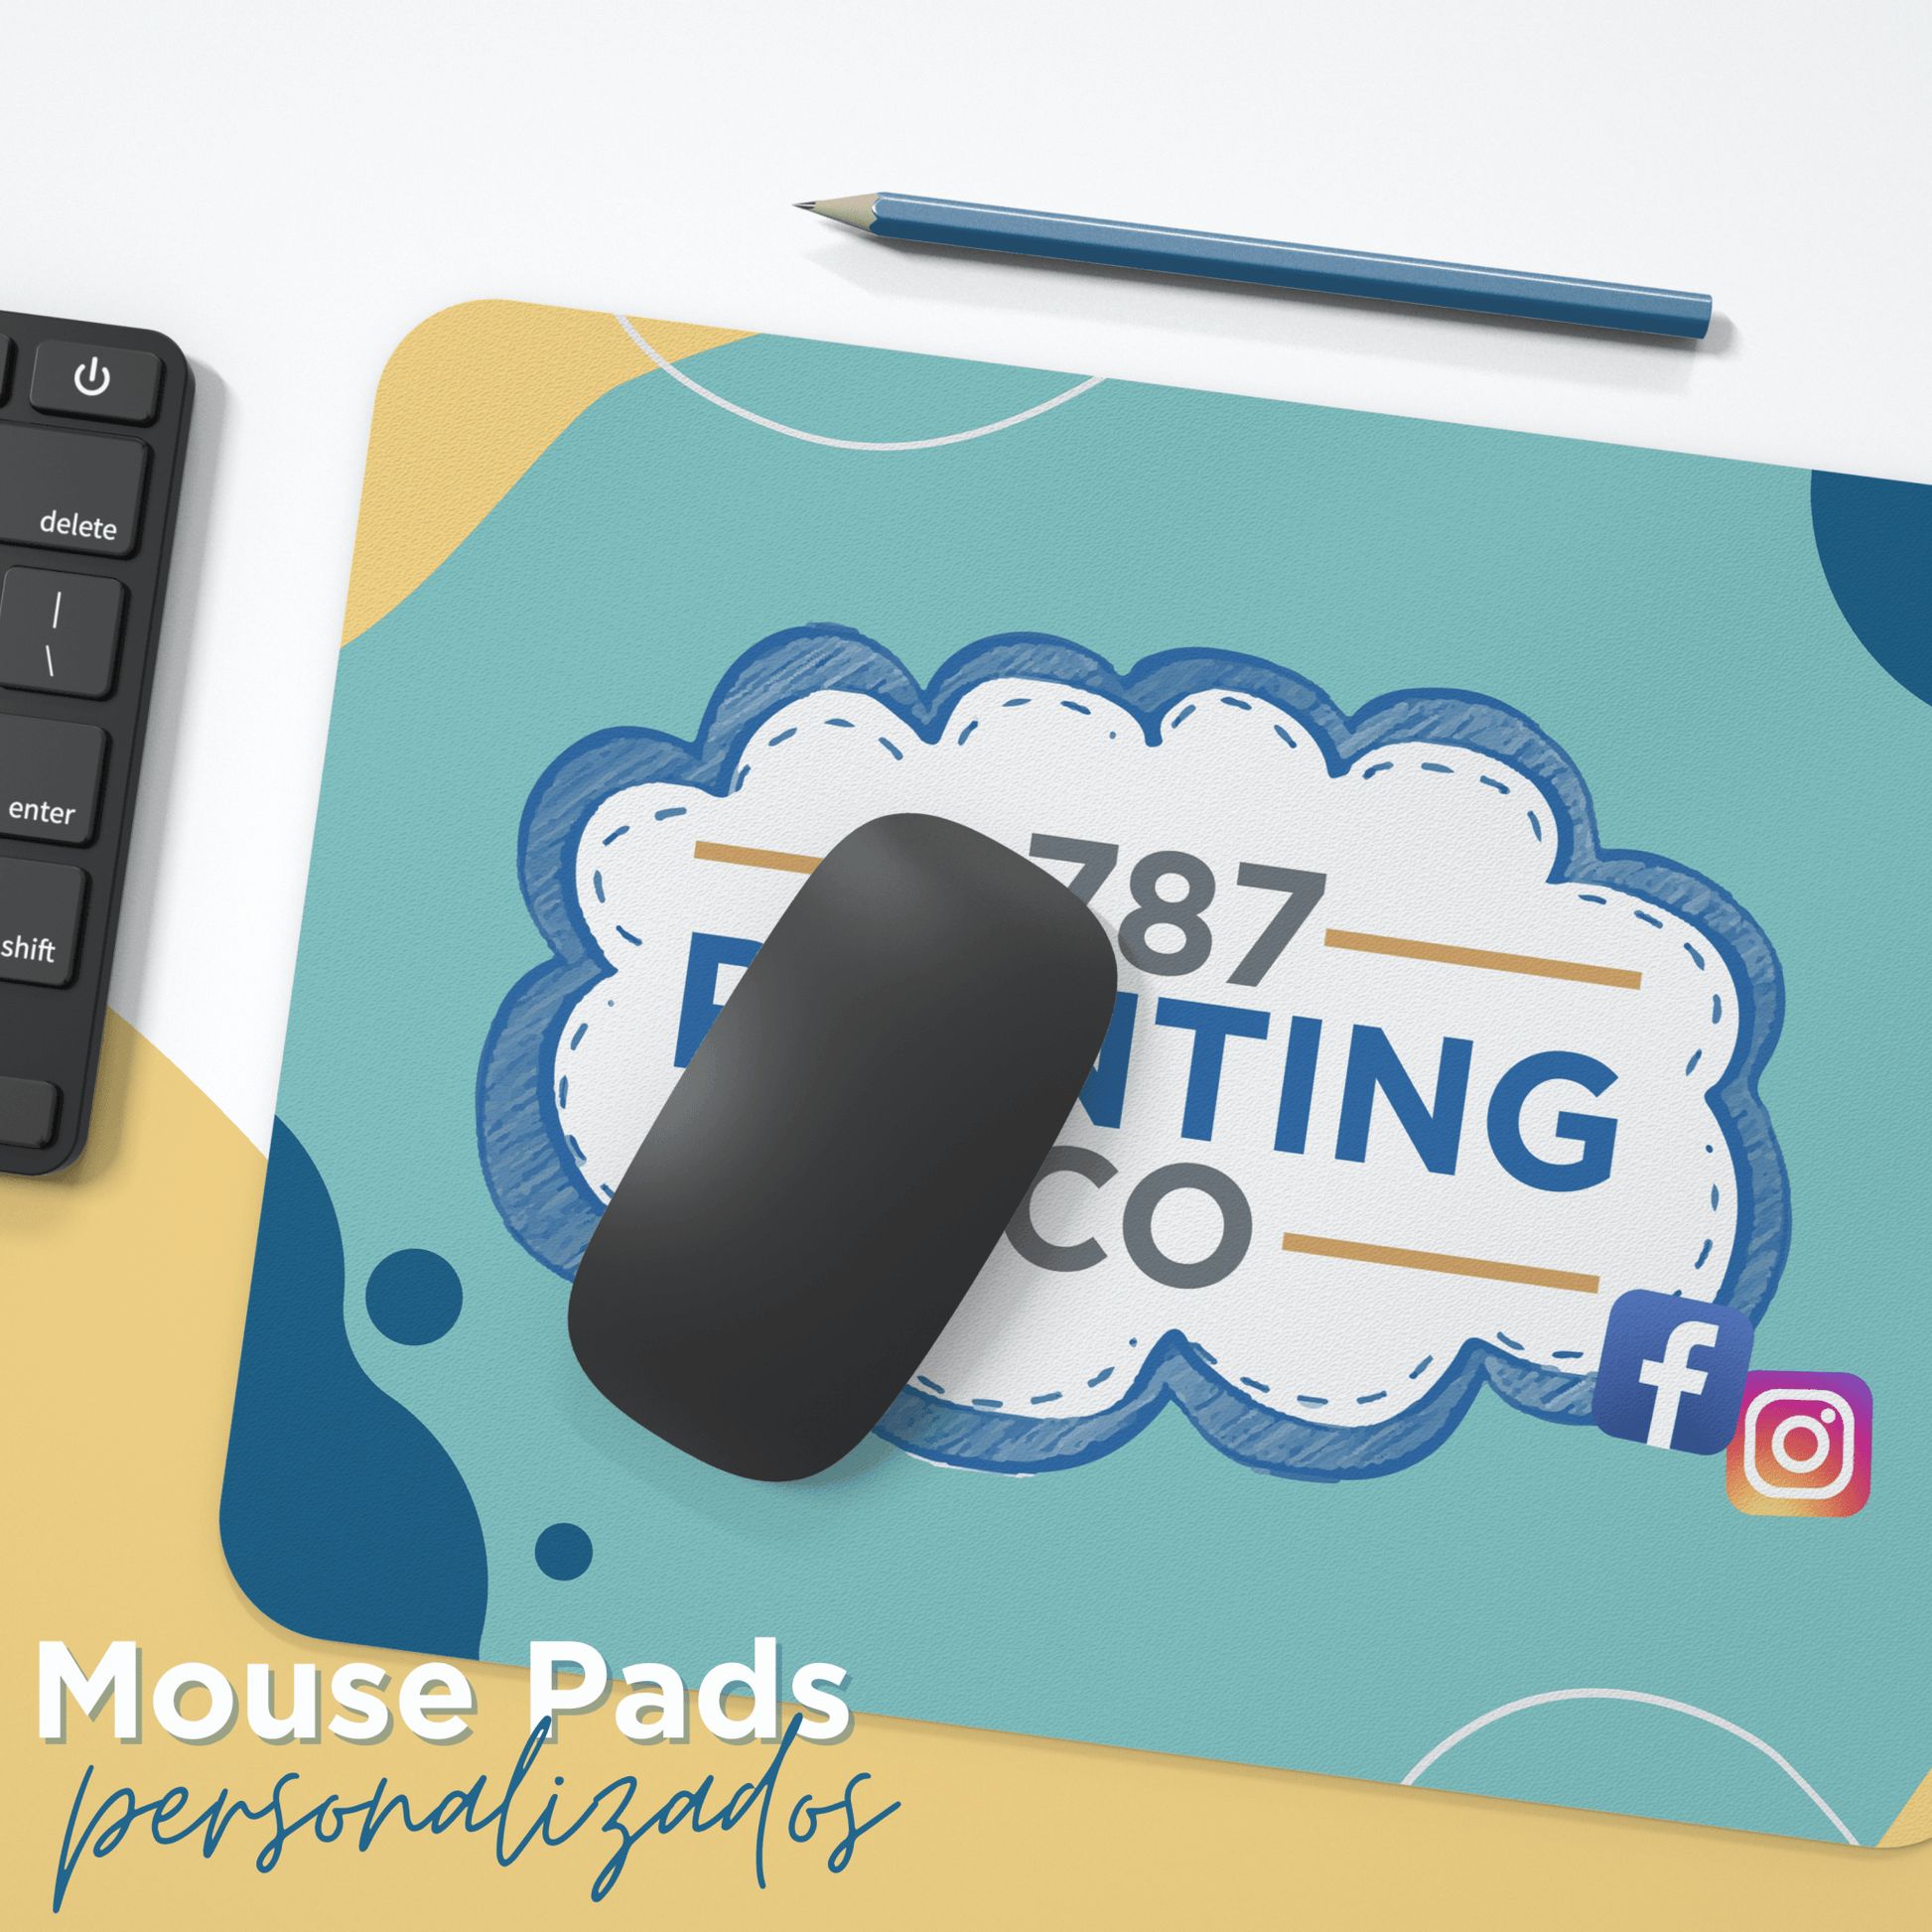 Custom Mouse Pad - 787 Printing Co.